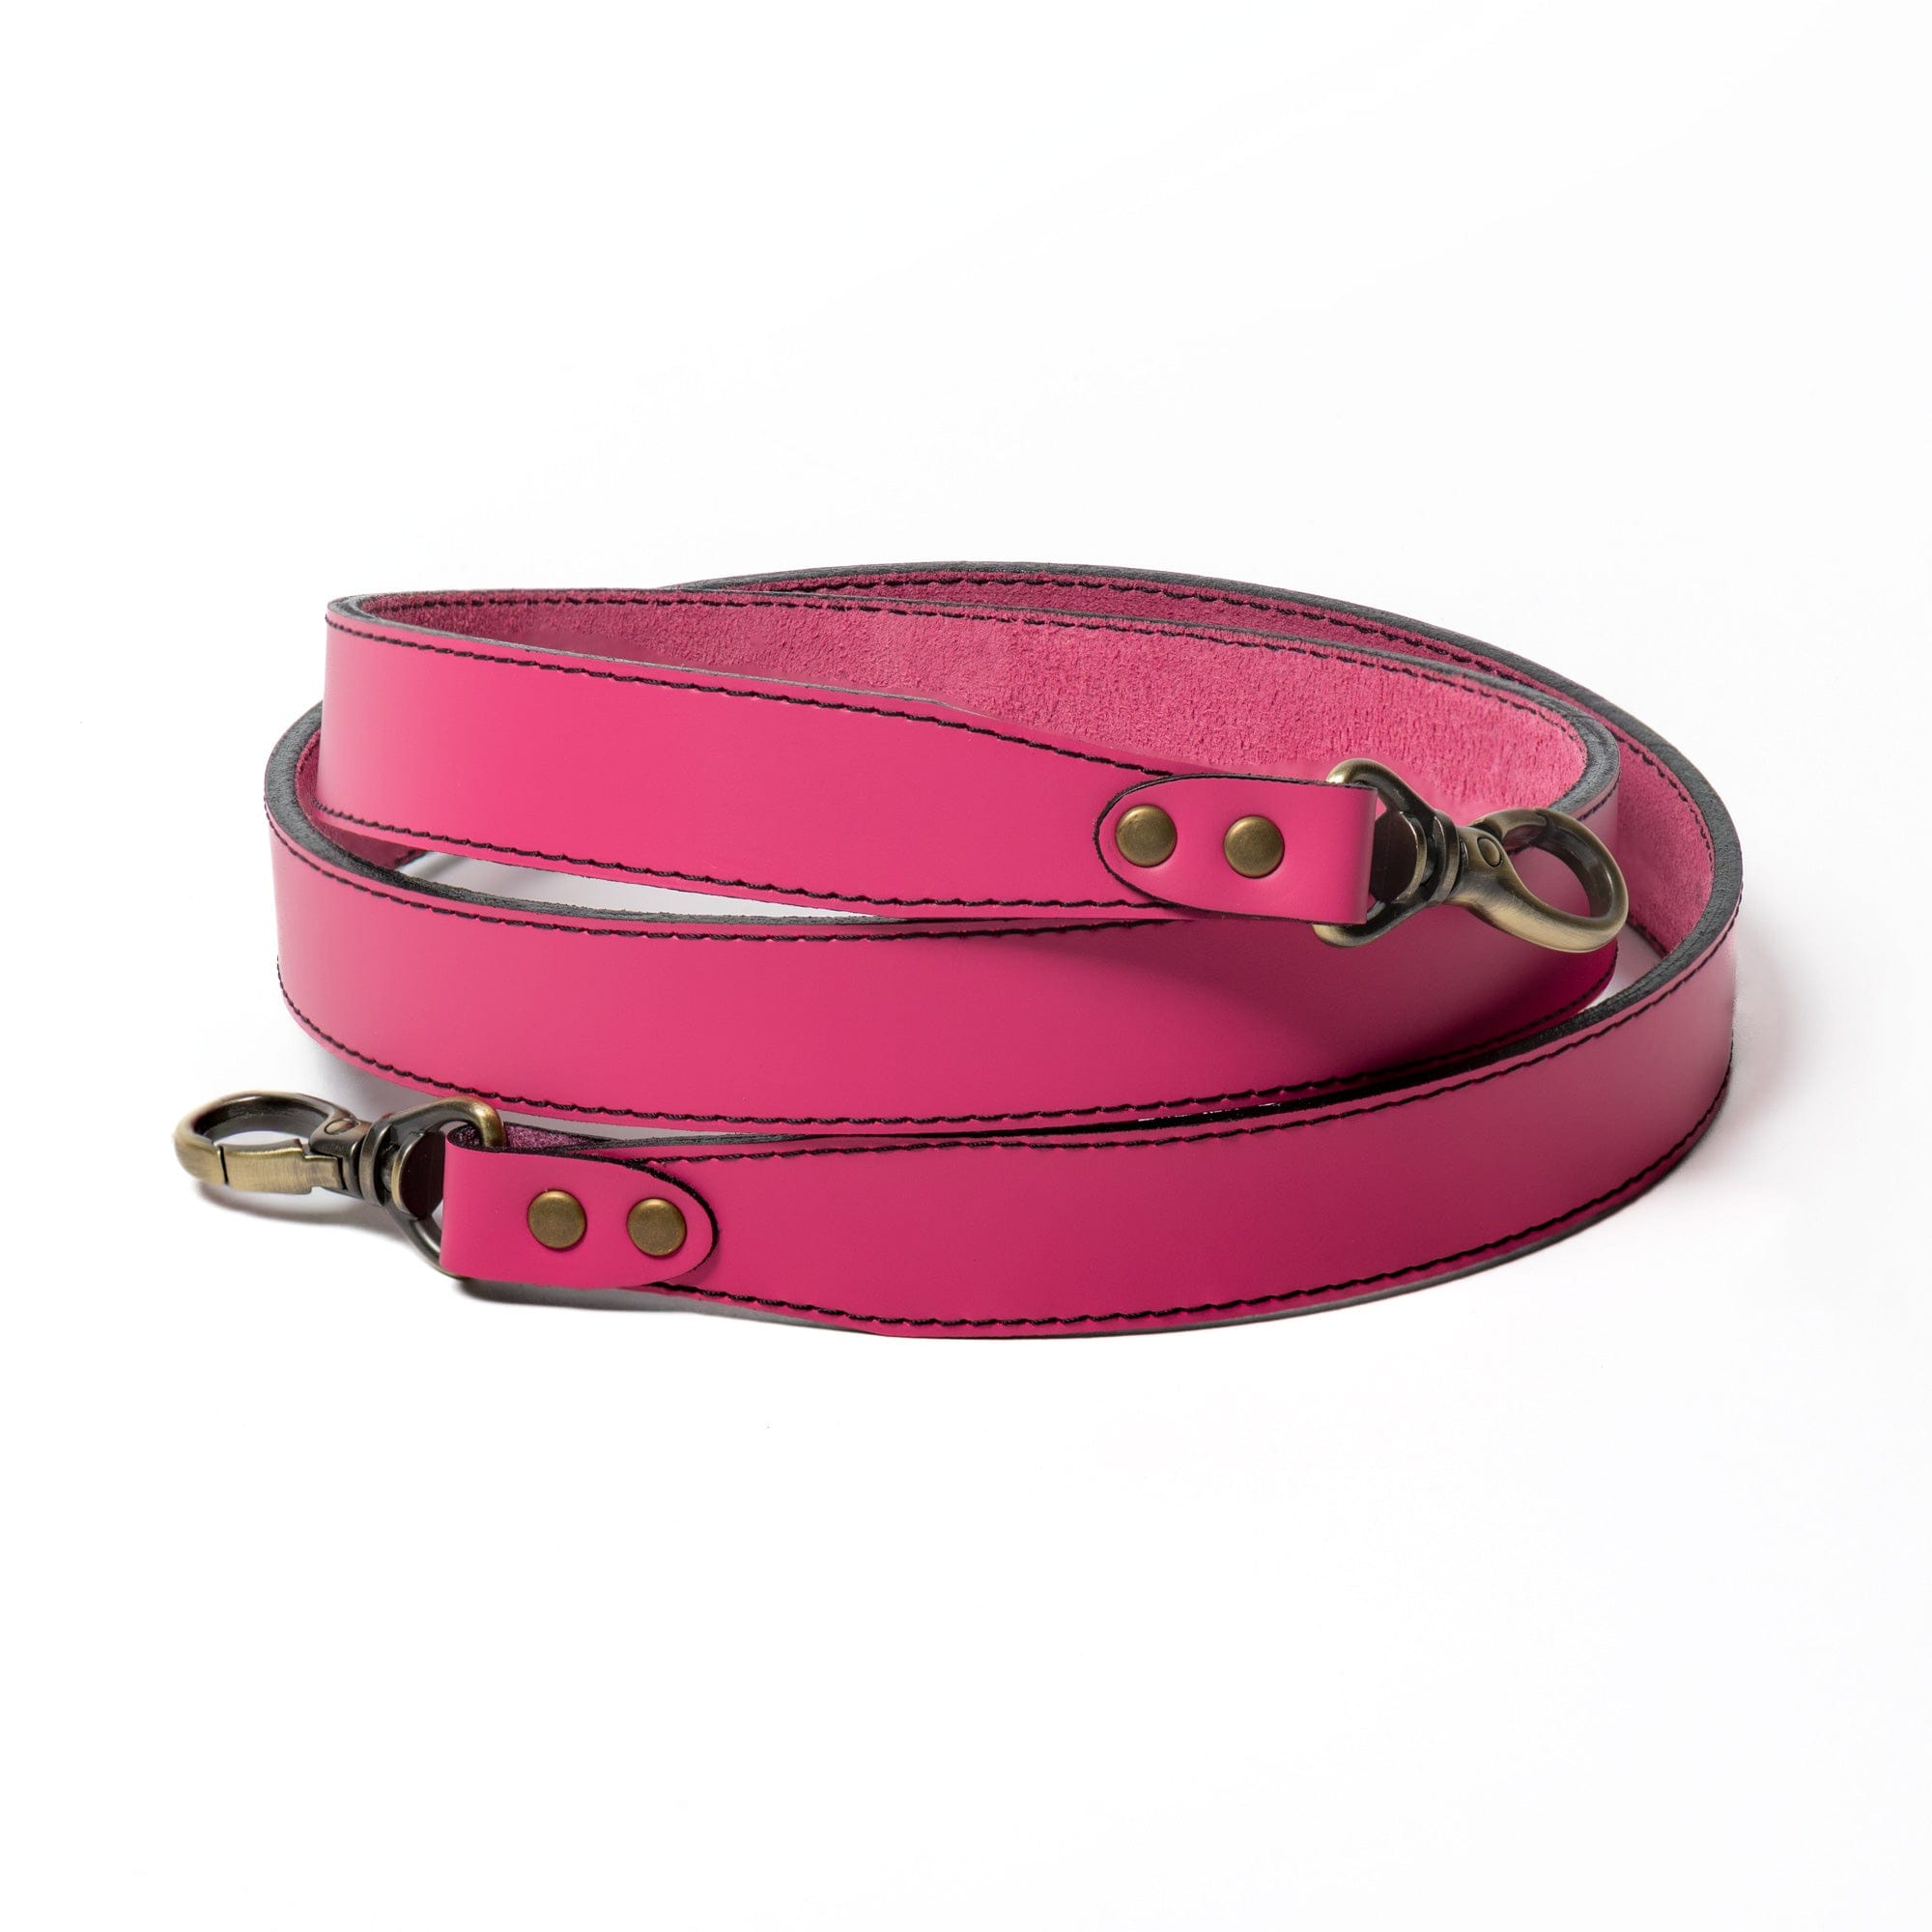 Zara pink suede handbag - Gem